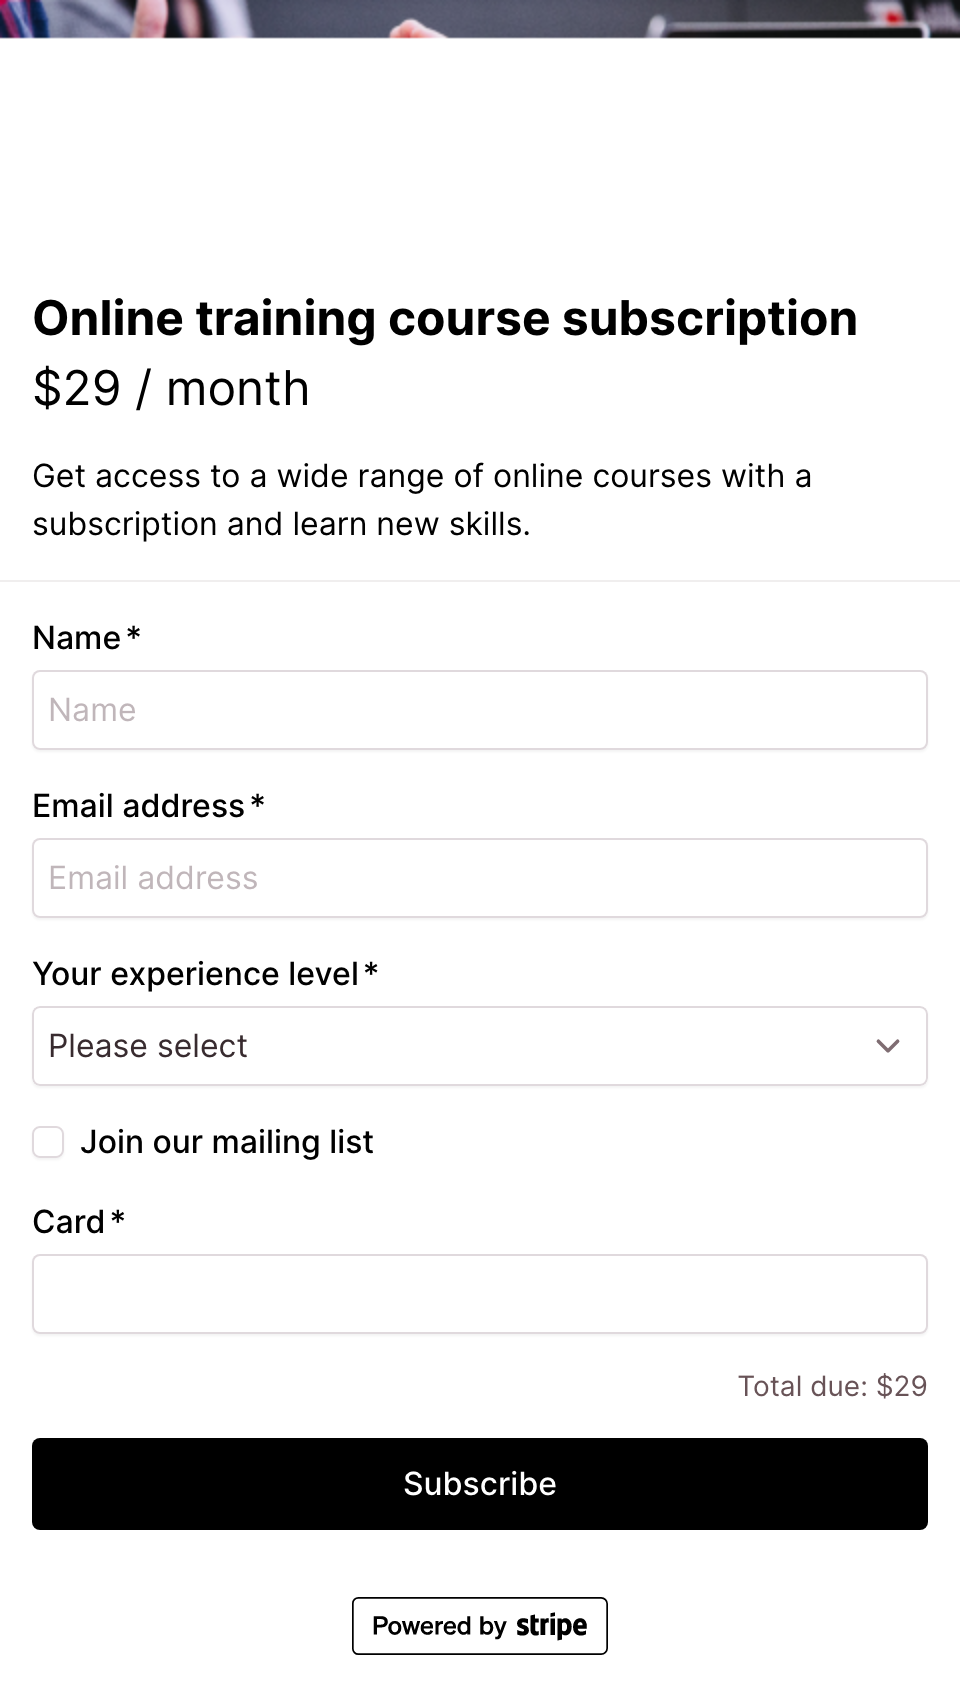 Online training course subscription checkout form